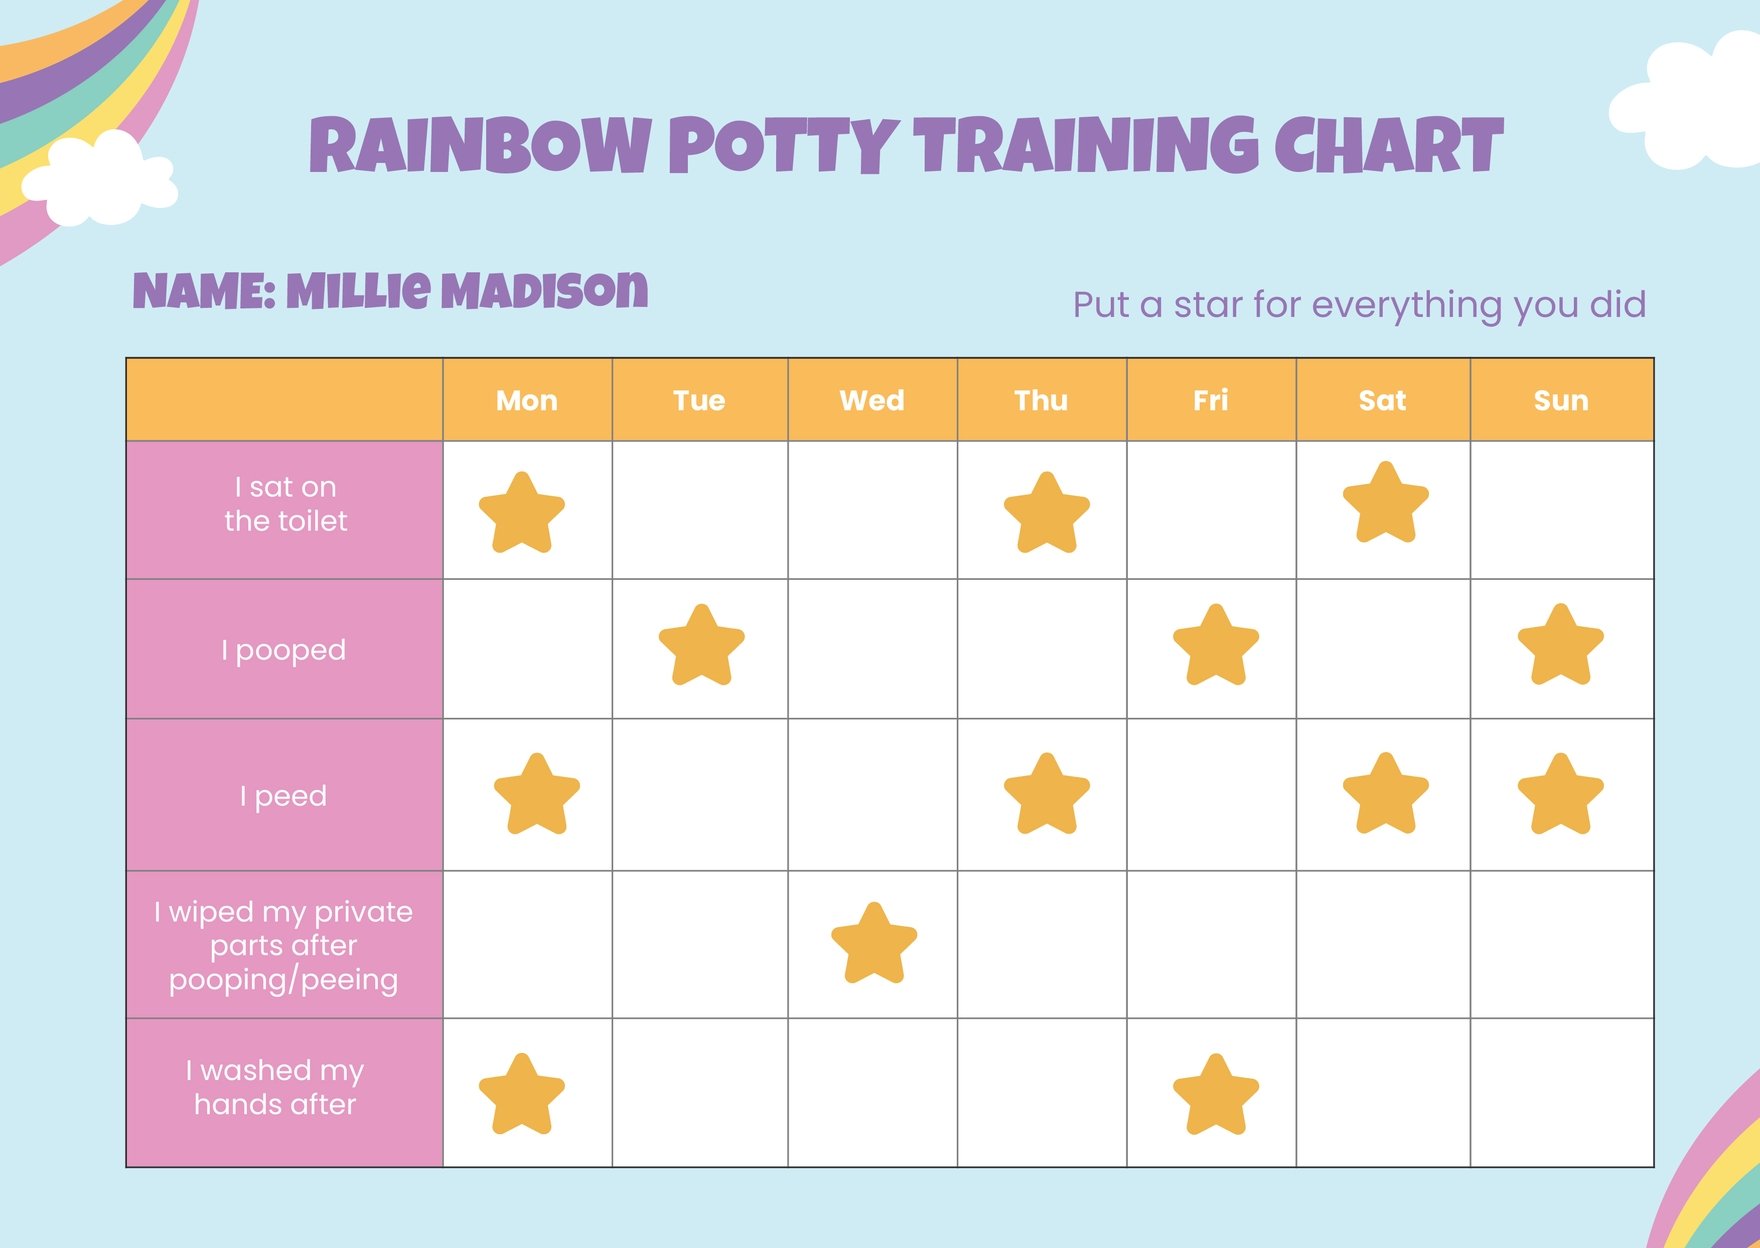 Rainbow Potty Training Chart in PDF, Illustrator